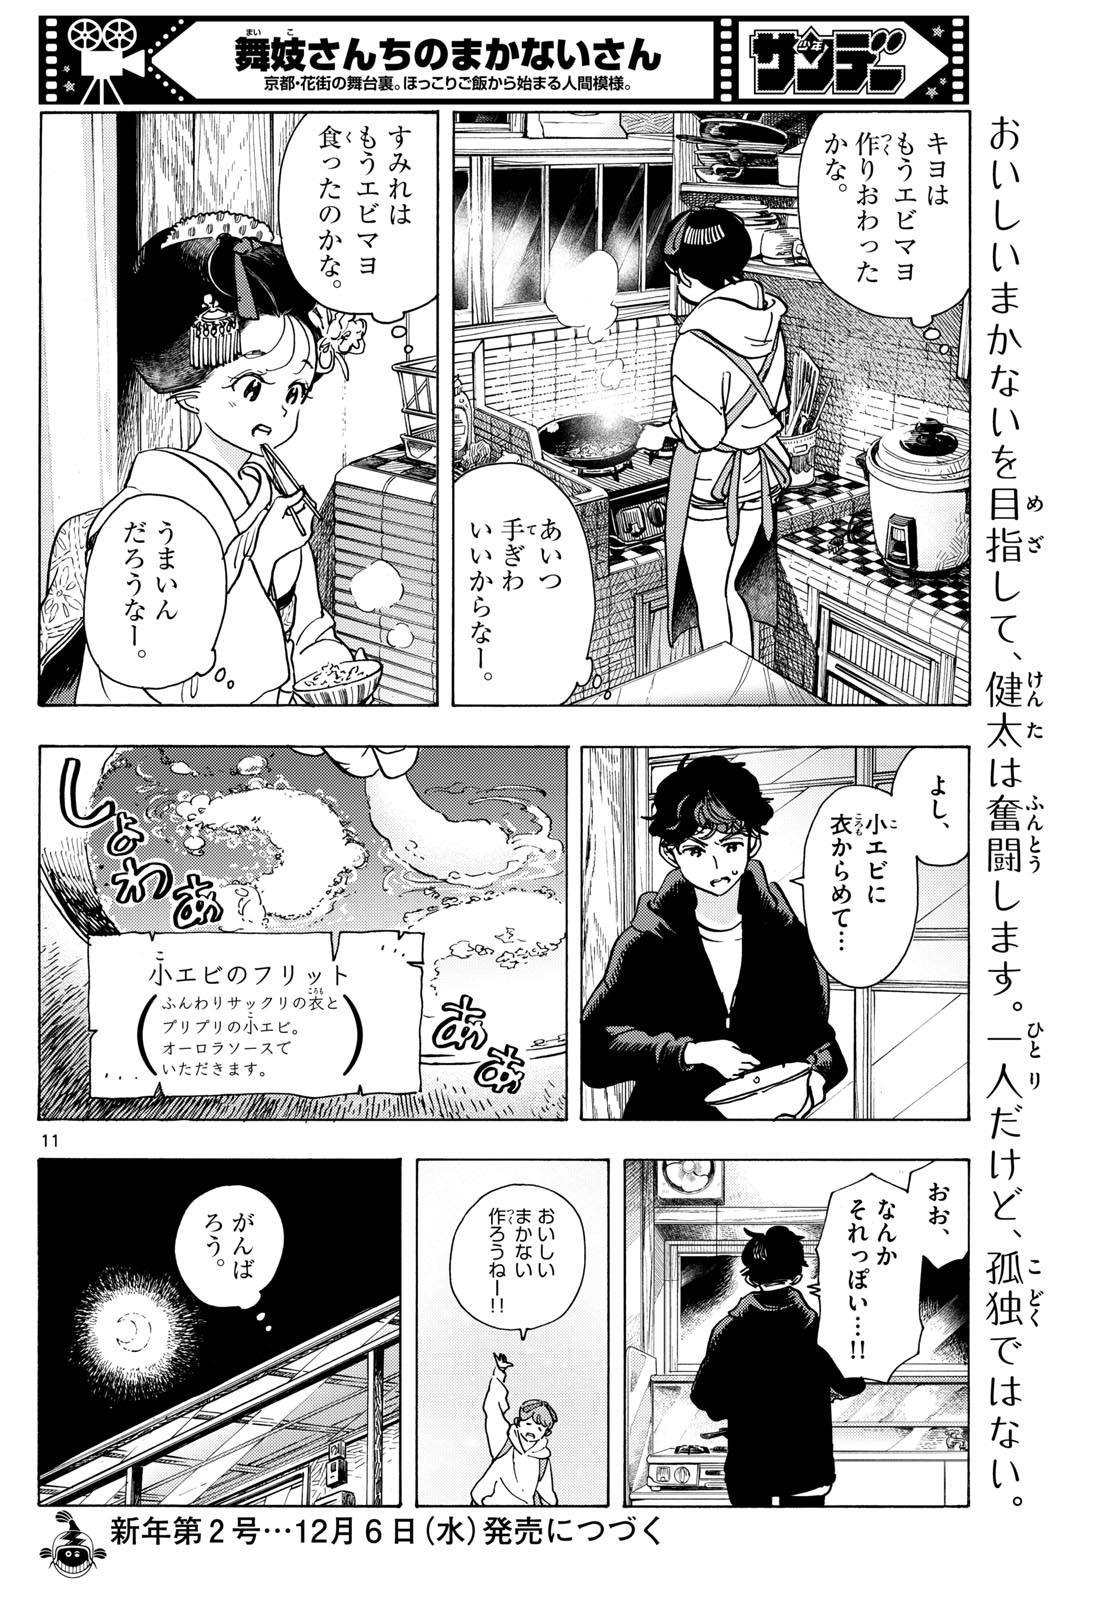 Maiko-san Chi no Makanai-san - Chapter 287 - Page 12